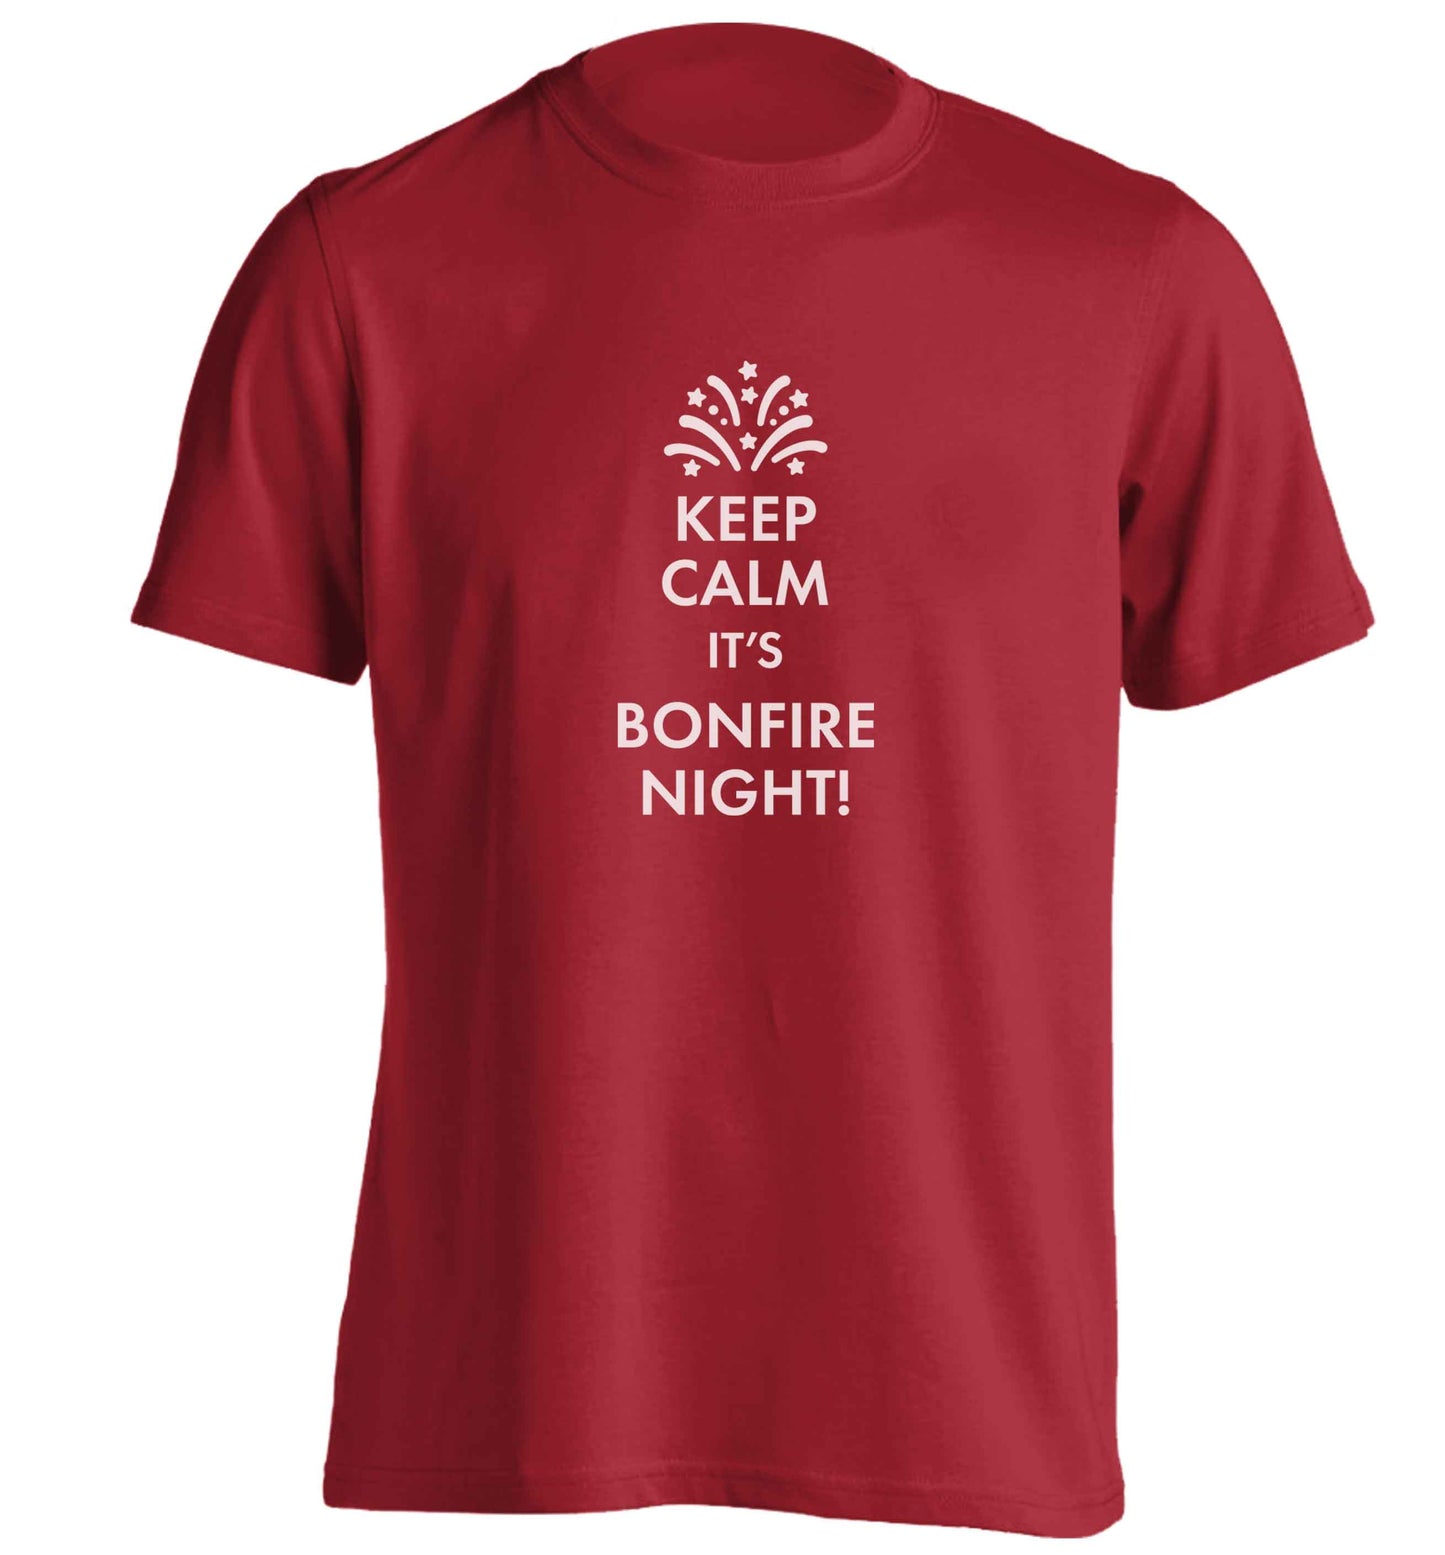 Keep calm its bonfire night adults unisex red Tshirt 2XL